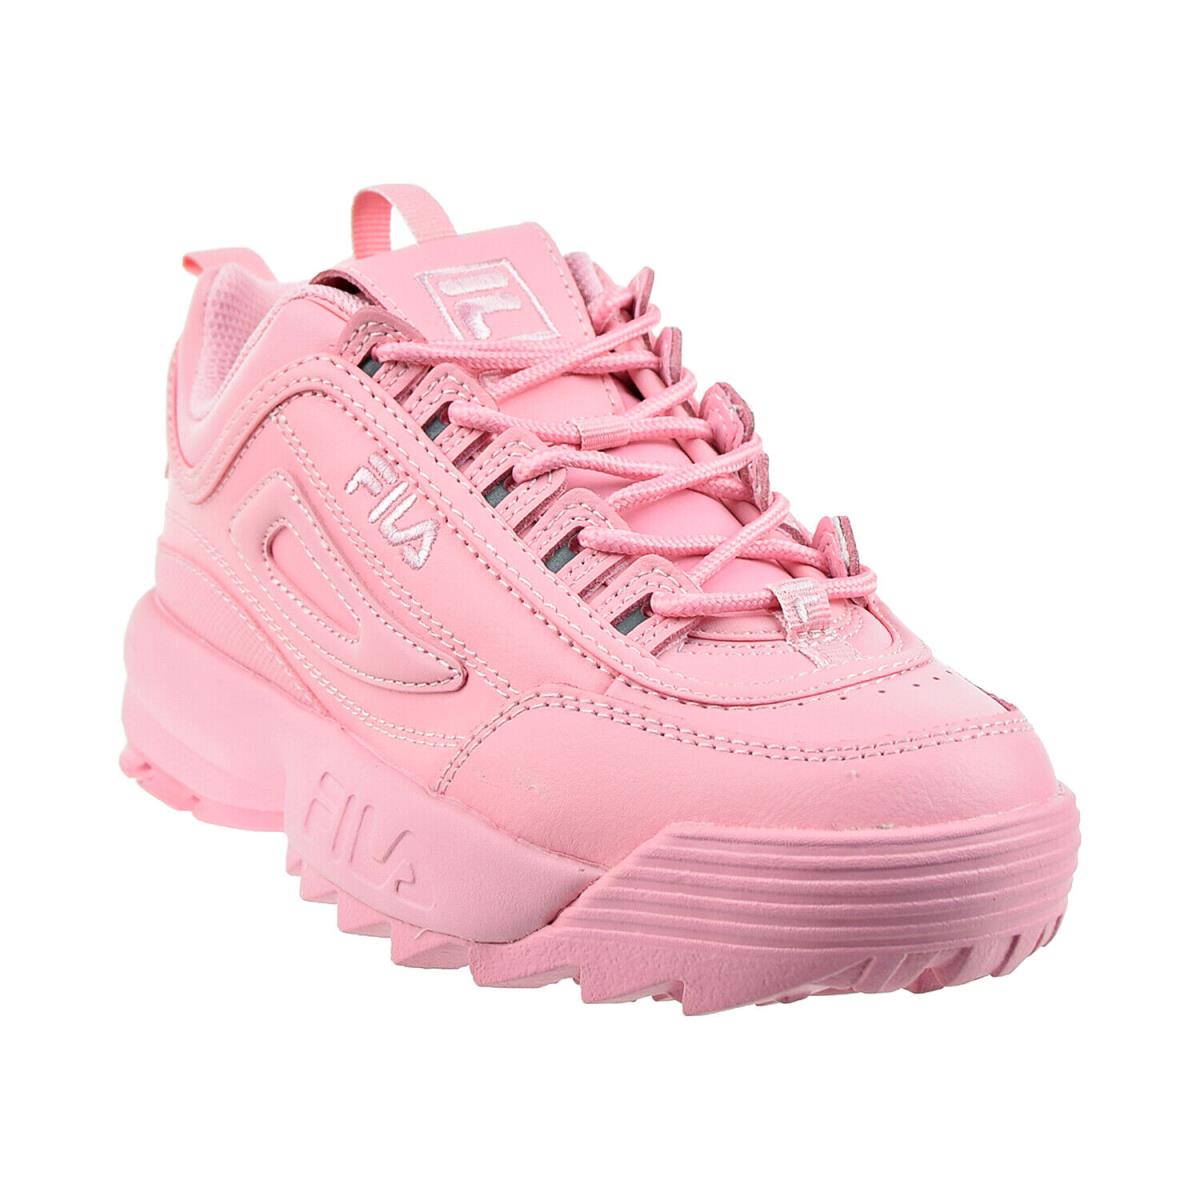 Fila Disruptor II Premium Women`s Shoes Coral Blush 5xm01763-651 - Coral Blush